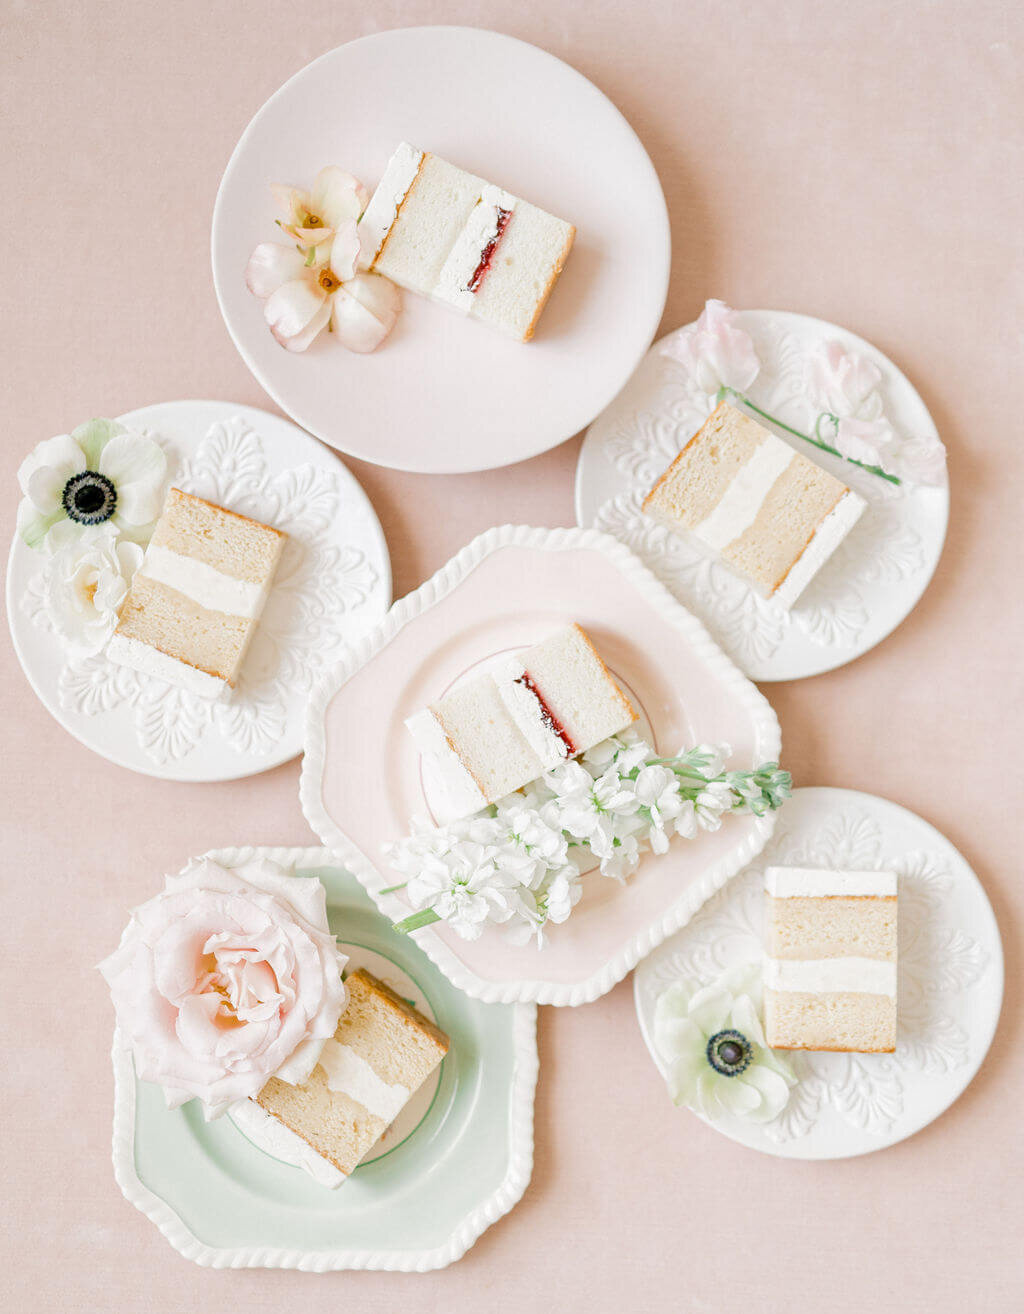 Wedding photography flatlay of wedding cakes by Rachael Mattio Photography